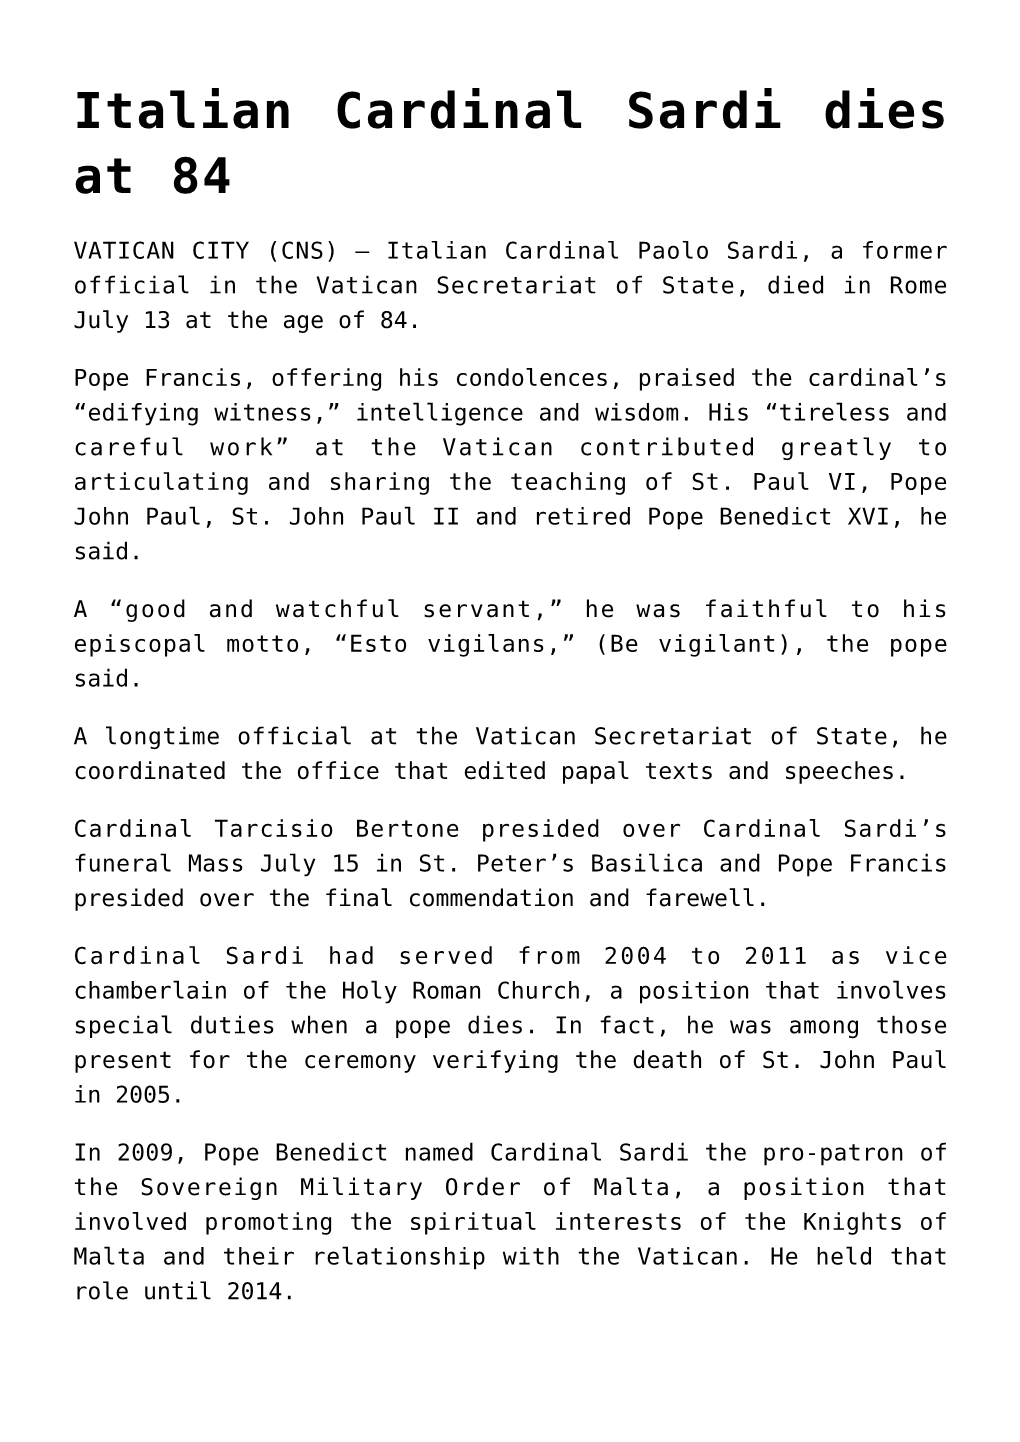 Italian Cardinal Sardi Dies at 84